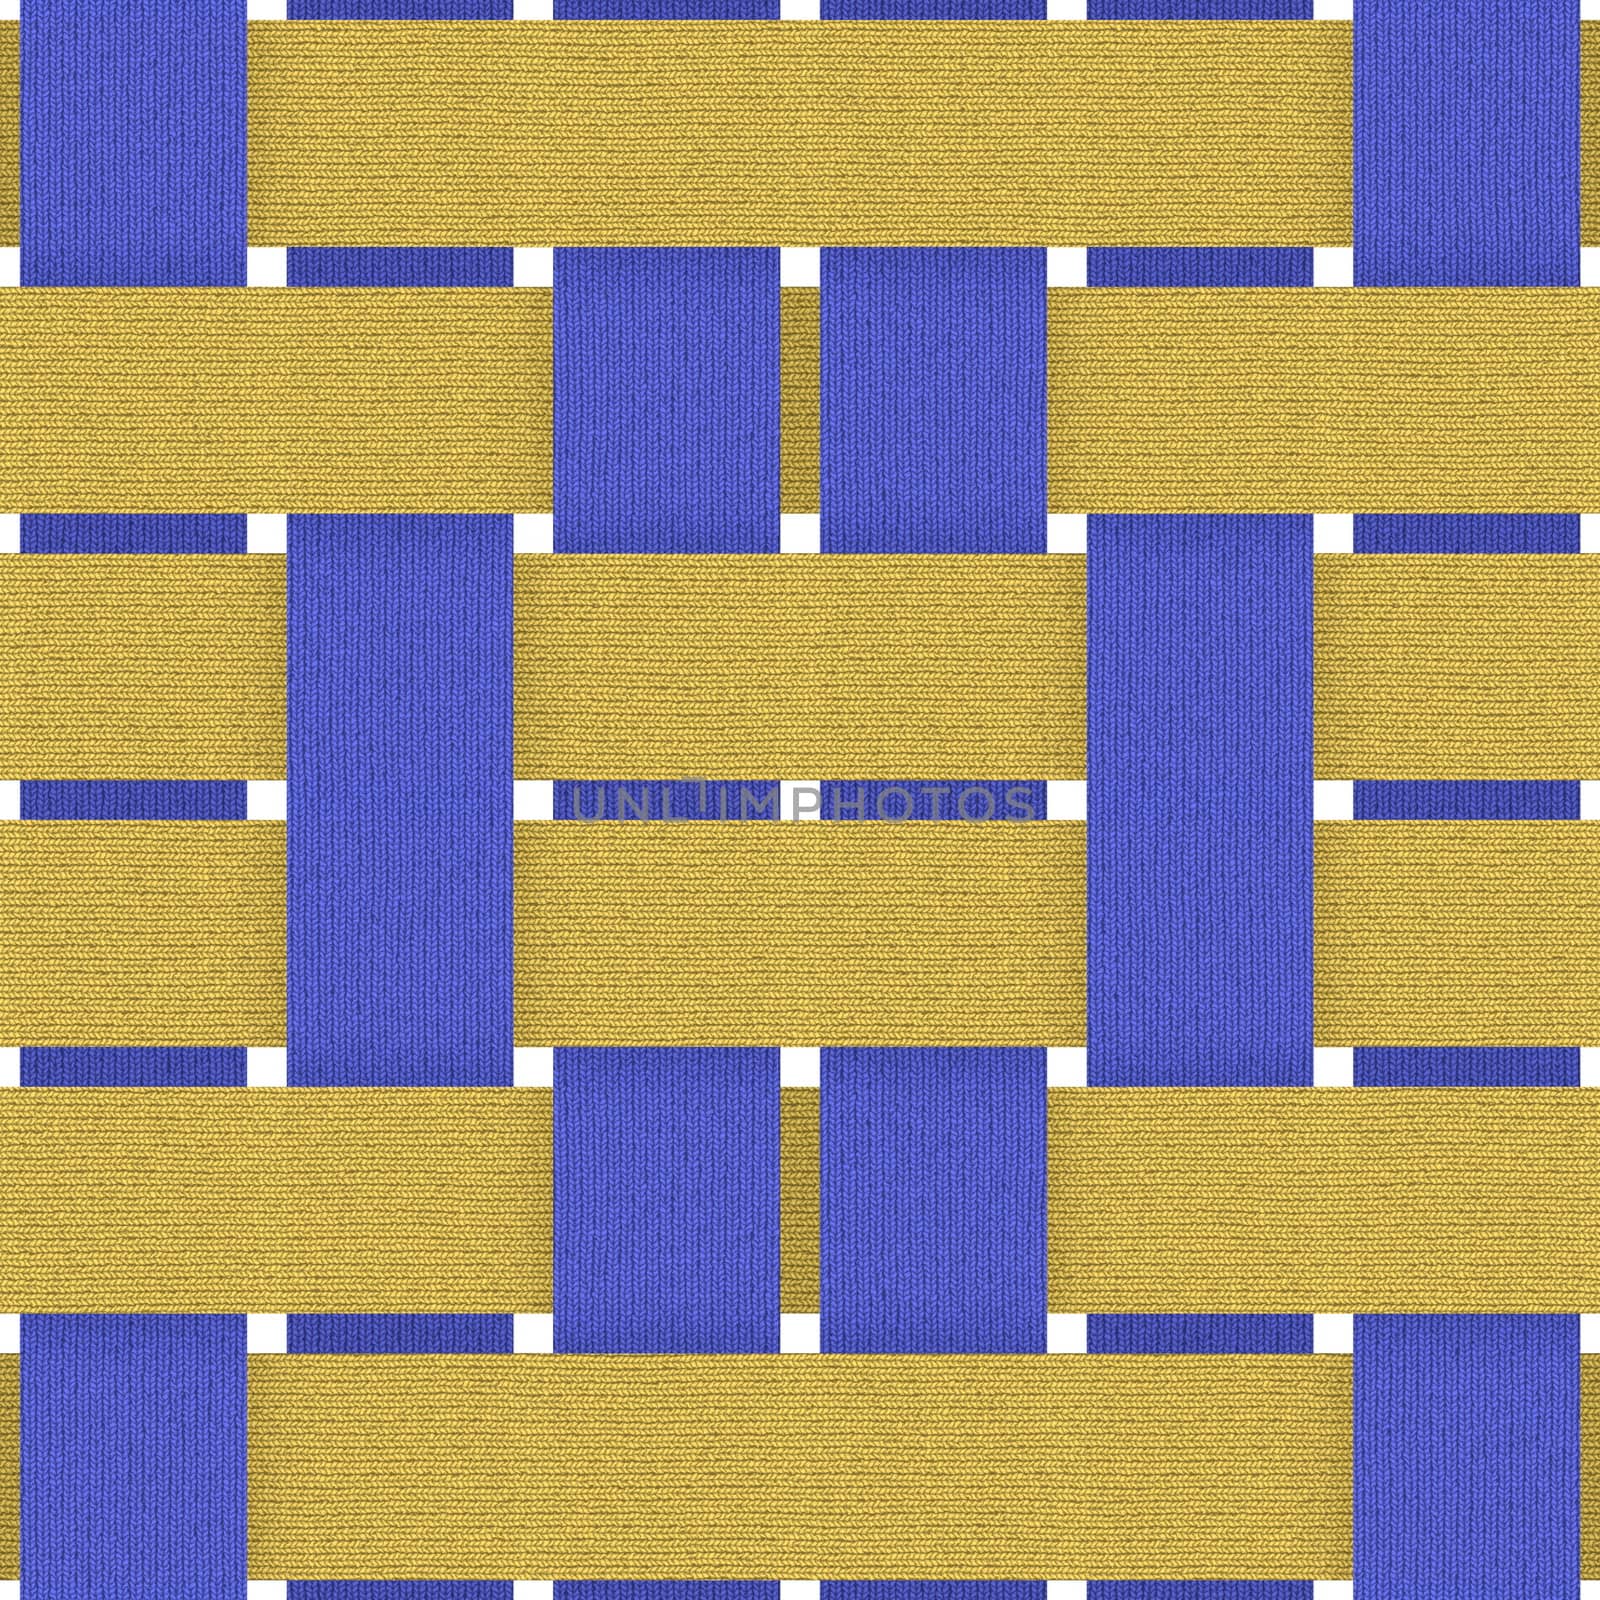 blue yellow fabric weave seamless background pattern